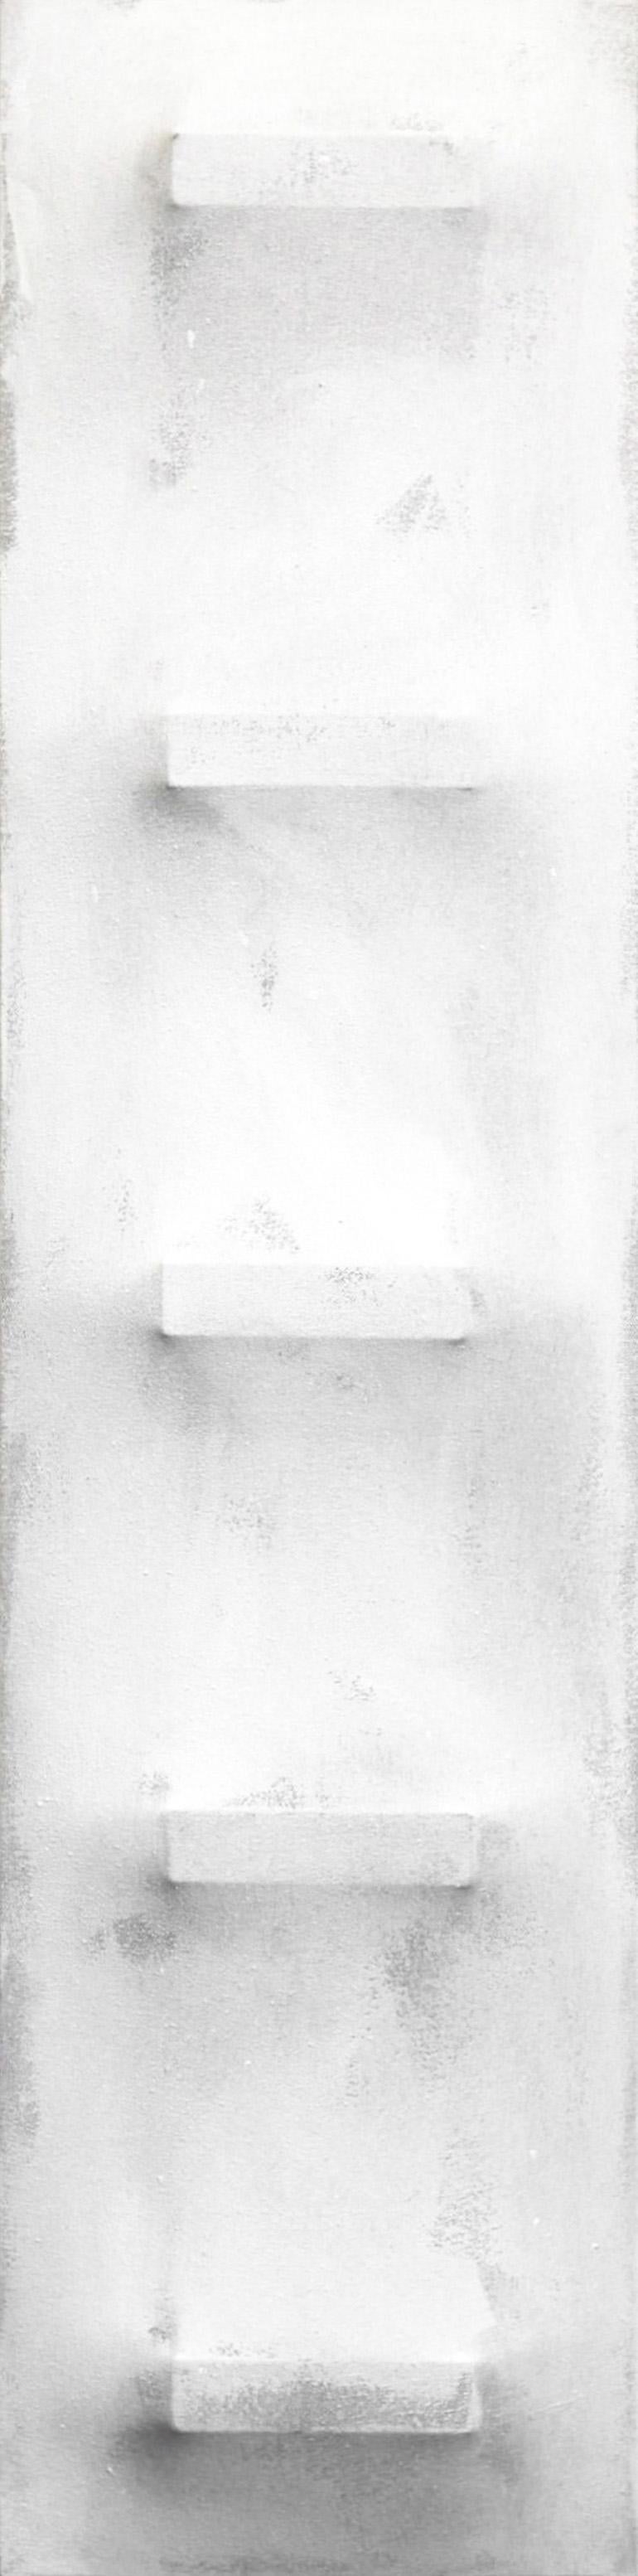 Len Klikunas Abstract Painting – The Fortune Teller B - Original Abstraktes, minimalistisches, skulpturales Gemälde